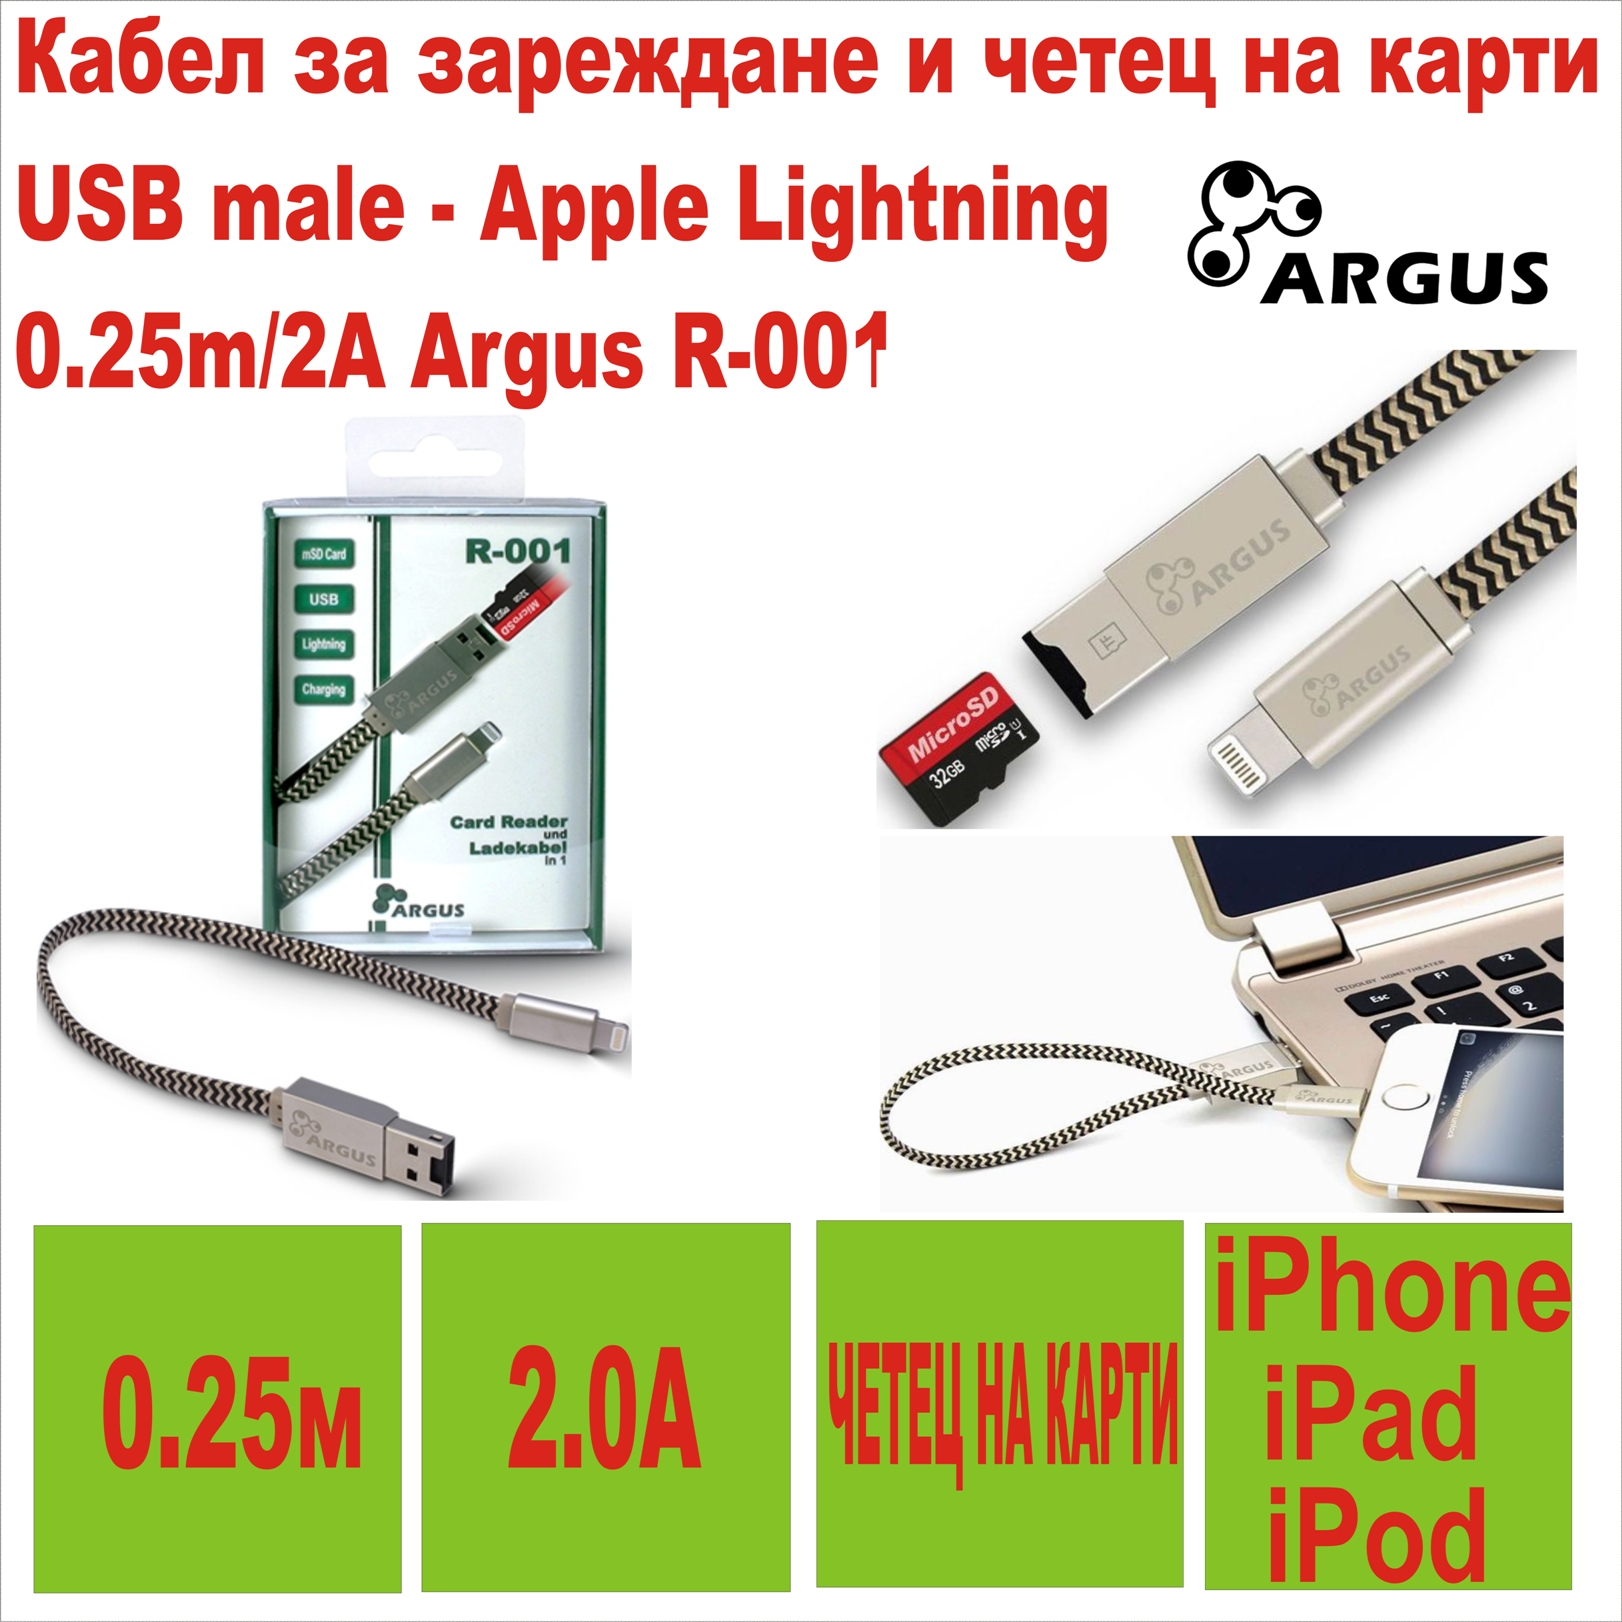 USB male - Apple Lightning 0.25m/2A Argus R-001